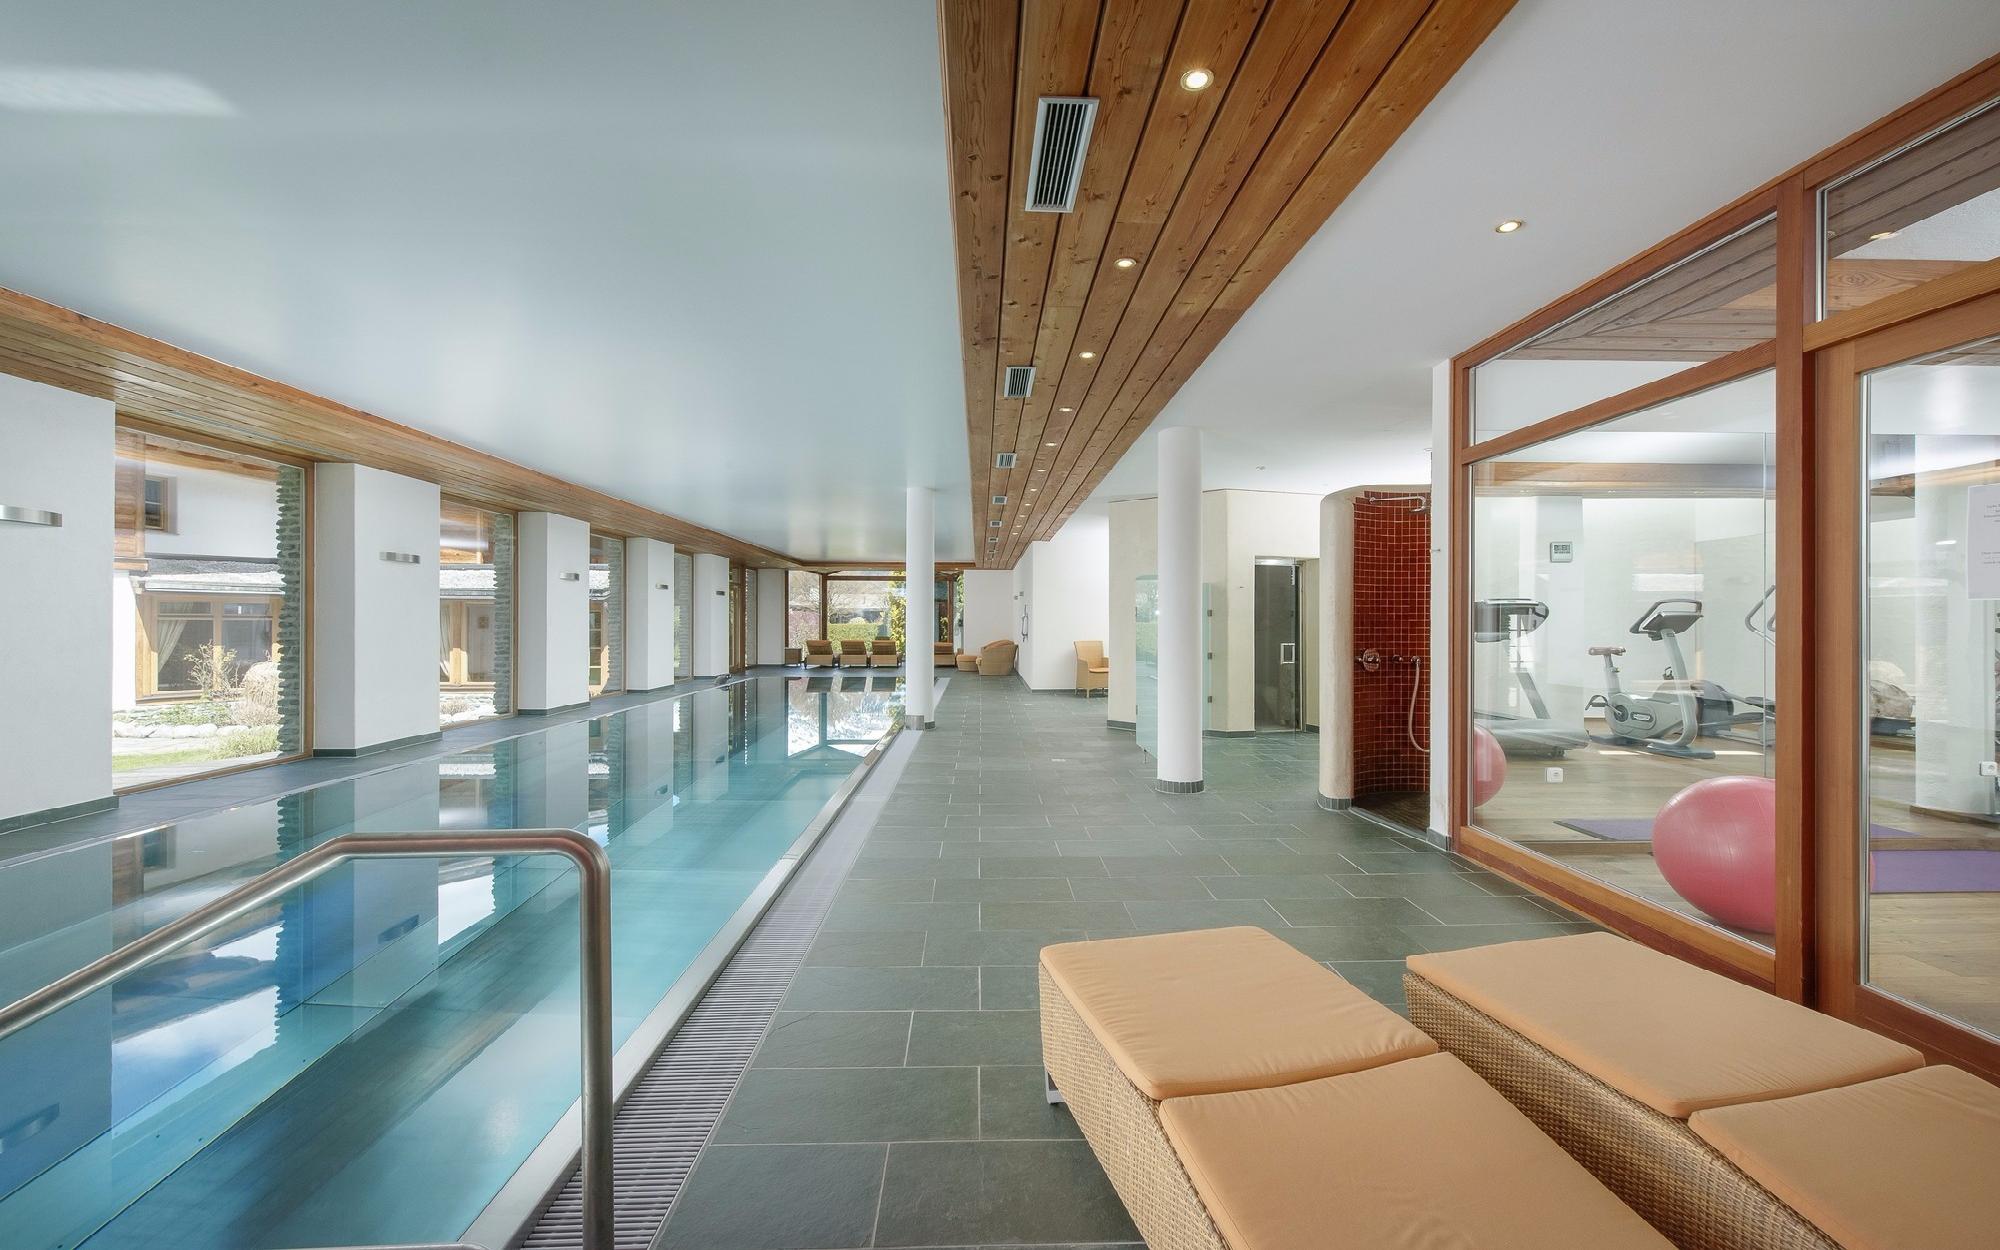 `Ski in - Ski out` luxury apartment in Ellmau in Tyrol for Sale